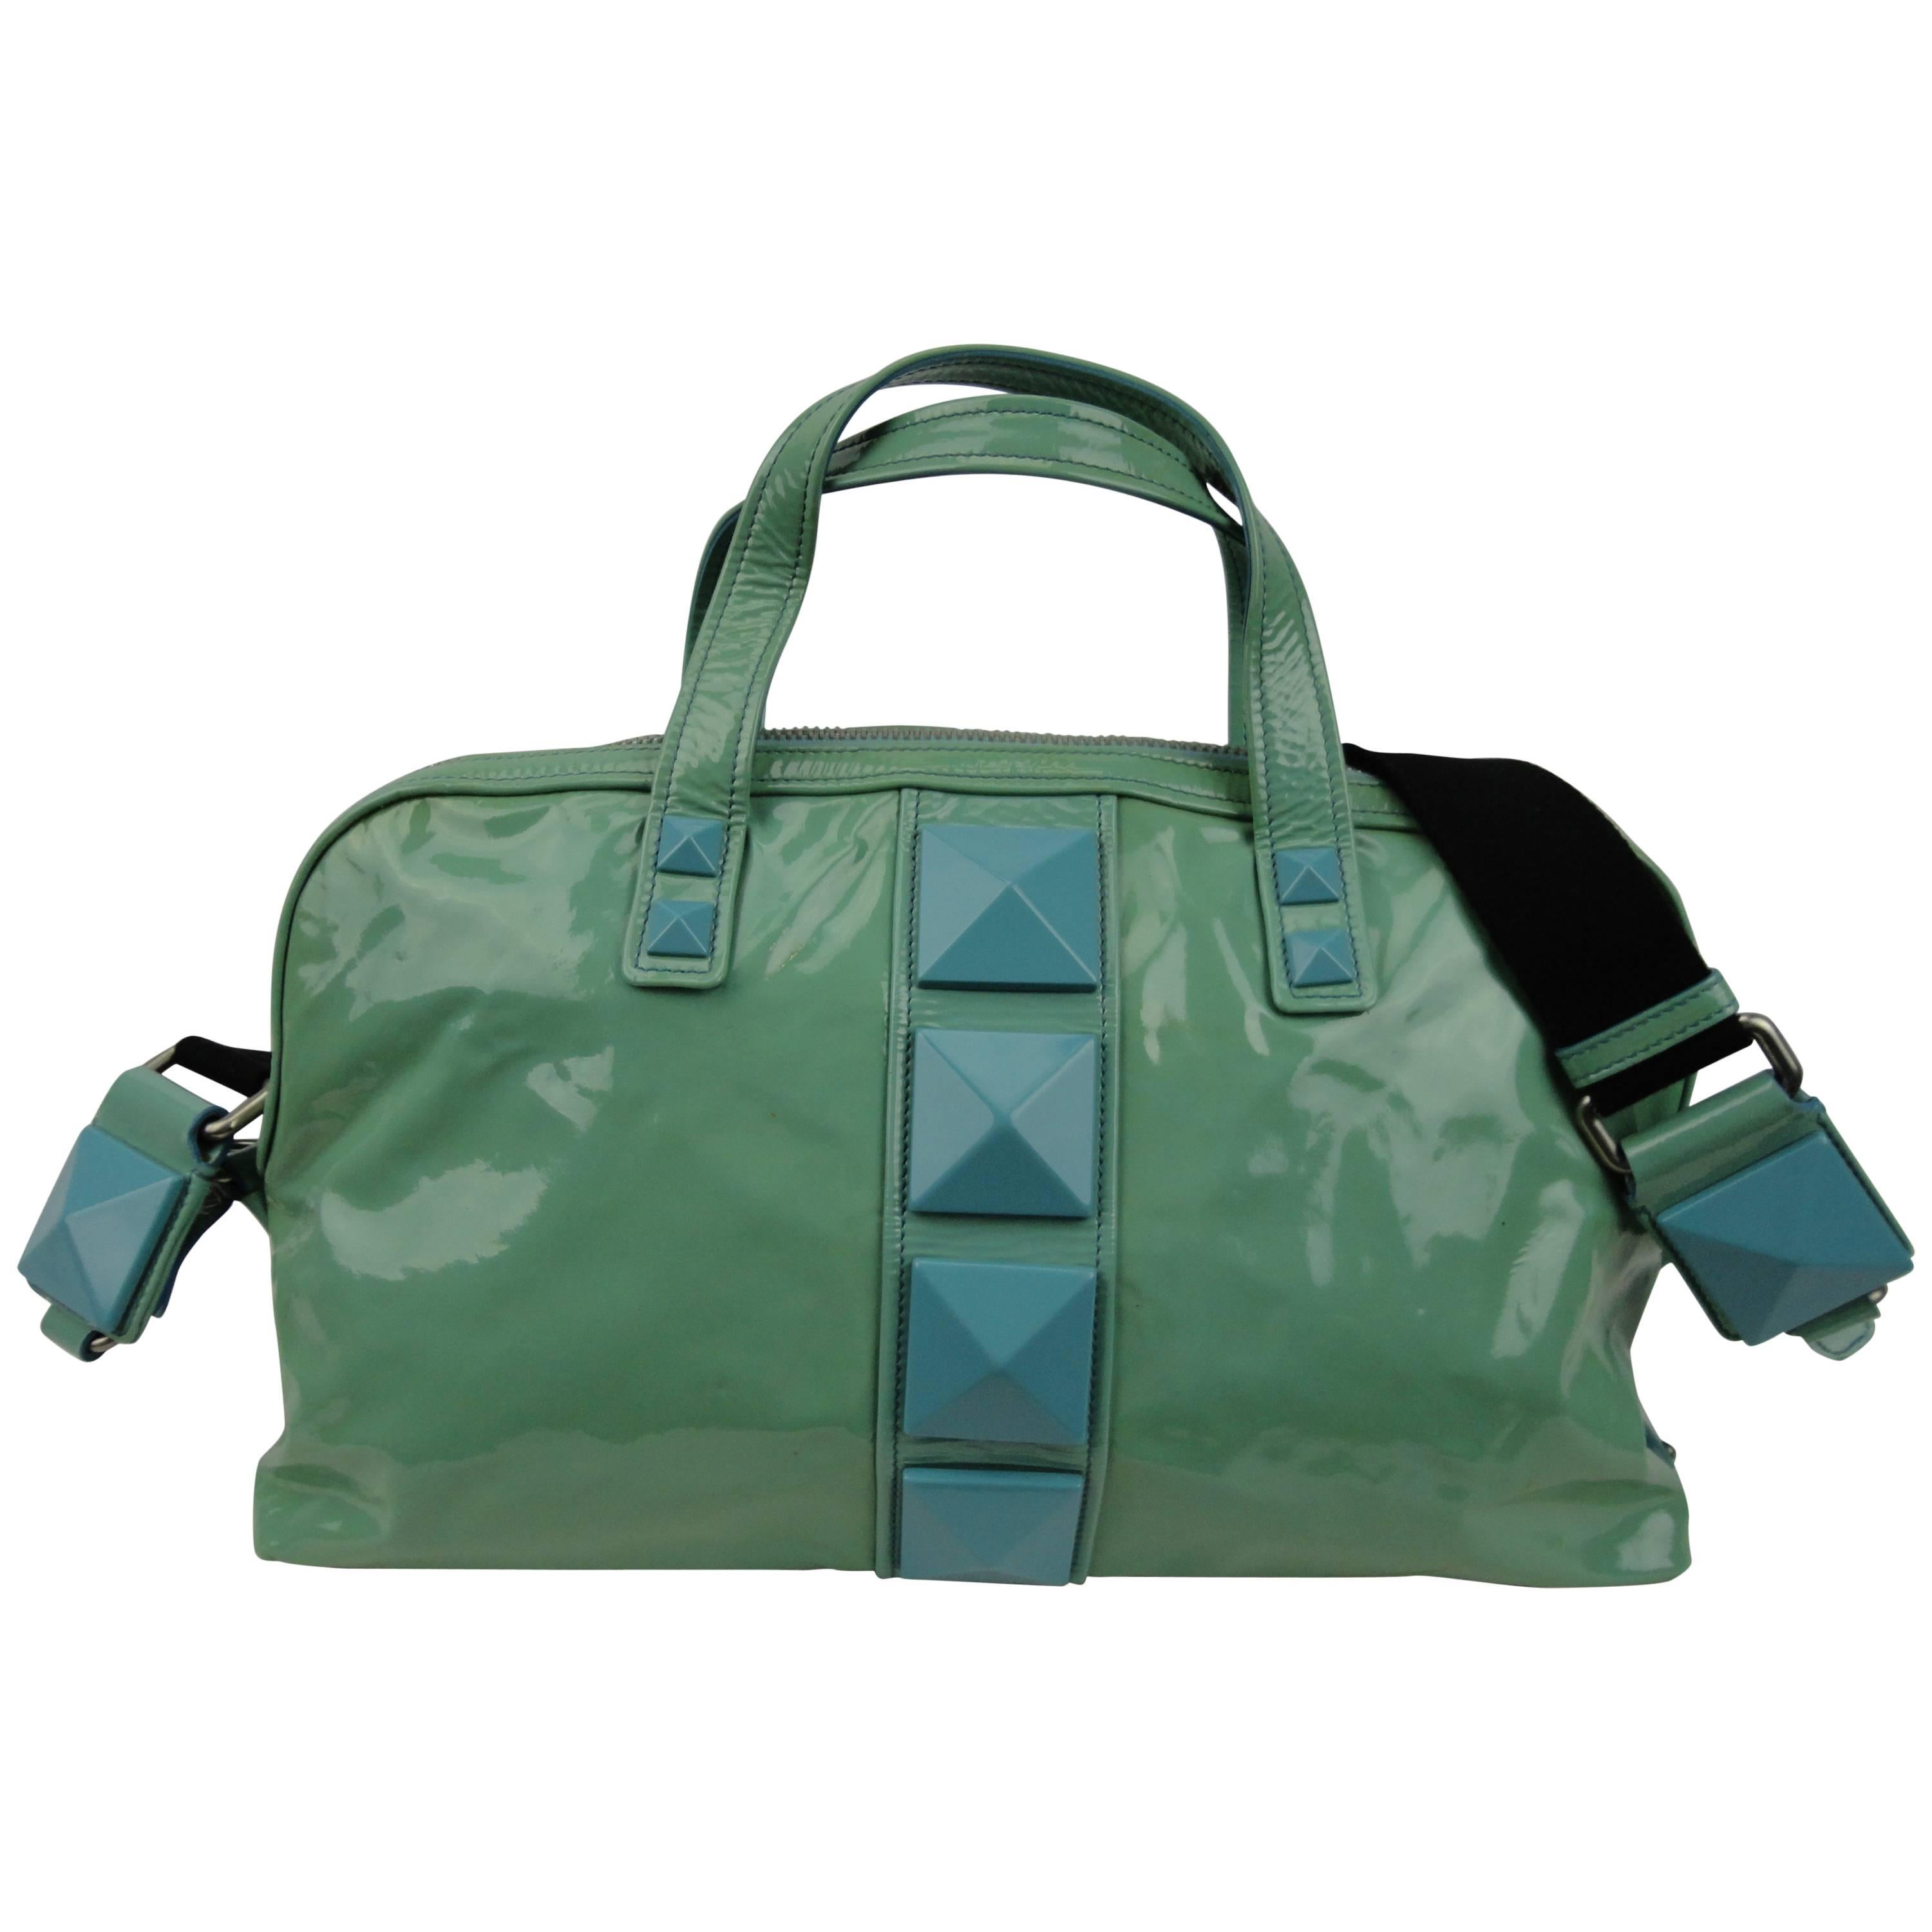 Marc Jacobs Aqua Patent Leather Bag